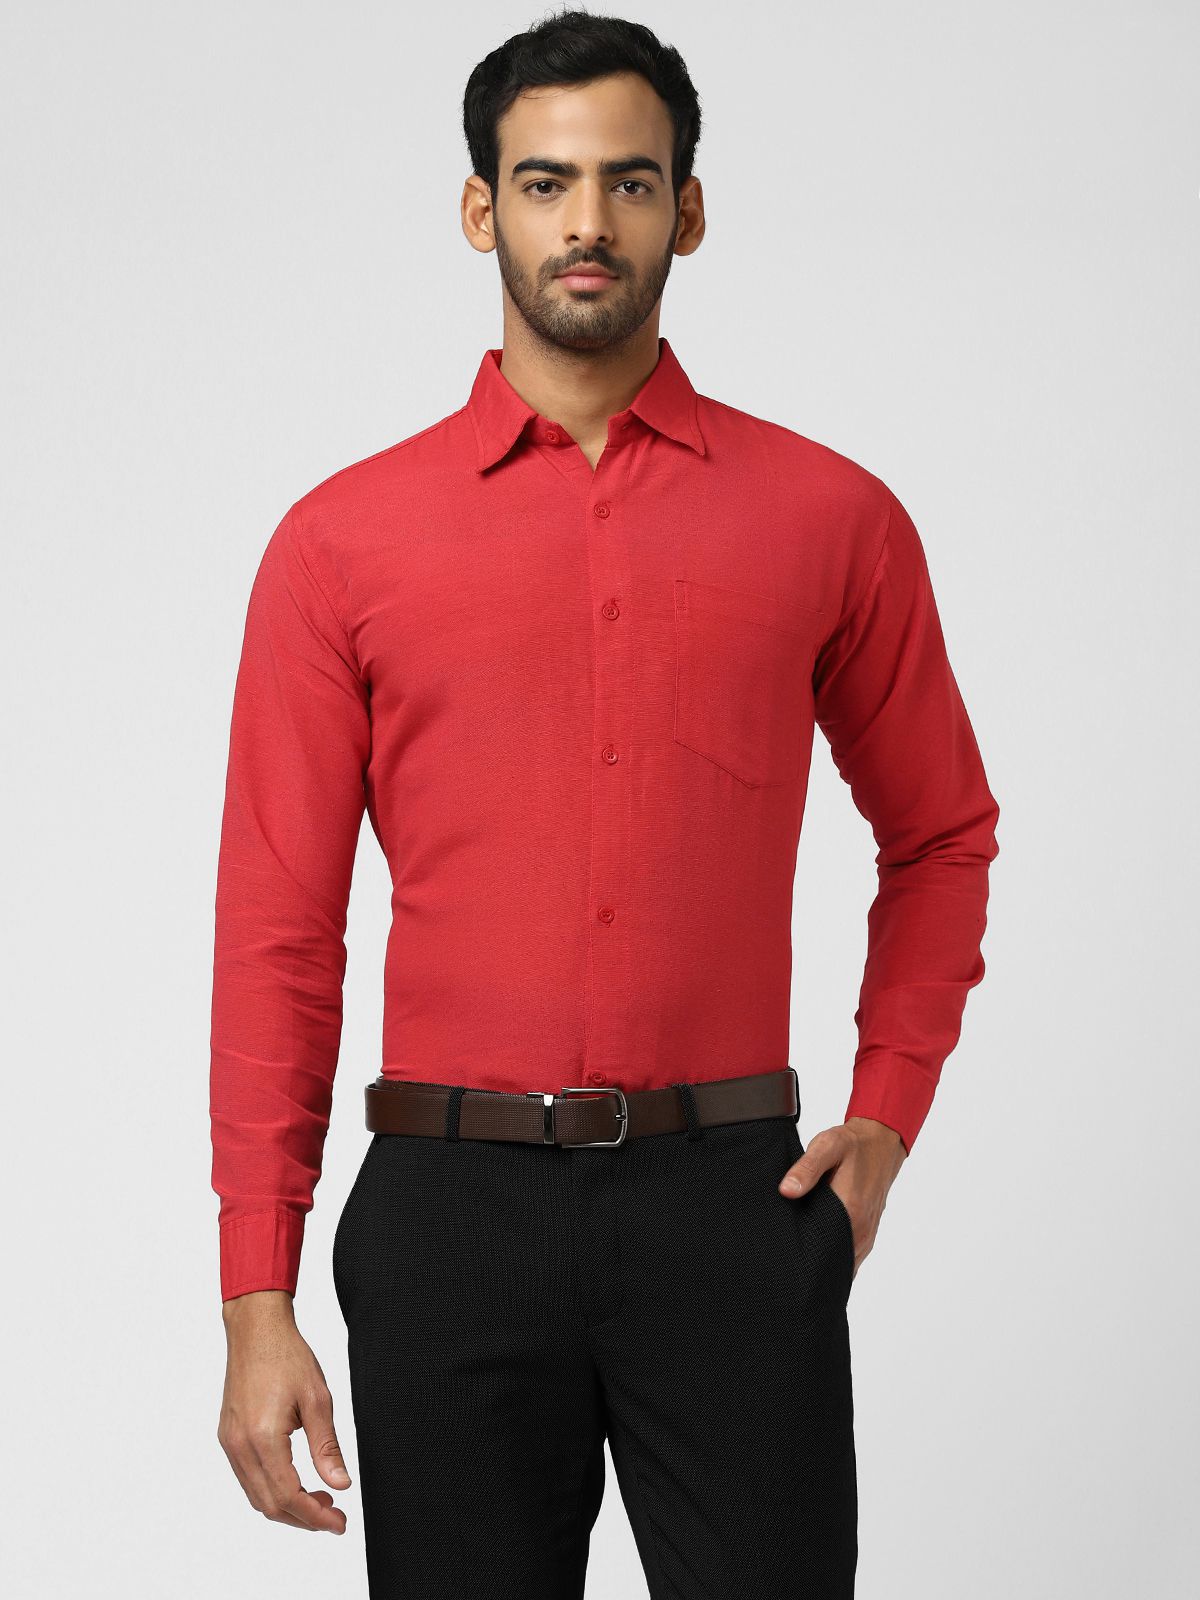     			DESHBANDHU DBK - Red Cotton Regular Fit Men's Casual Shirt (Pack of 1 )